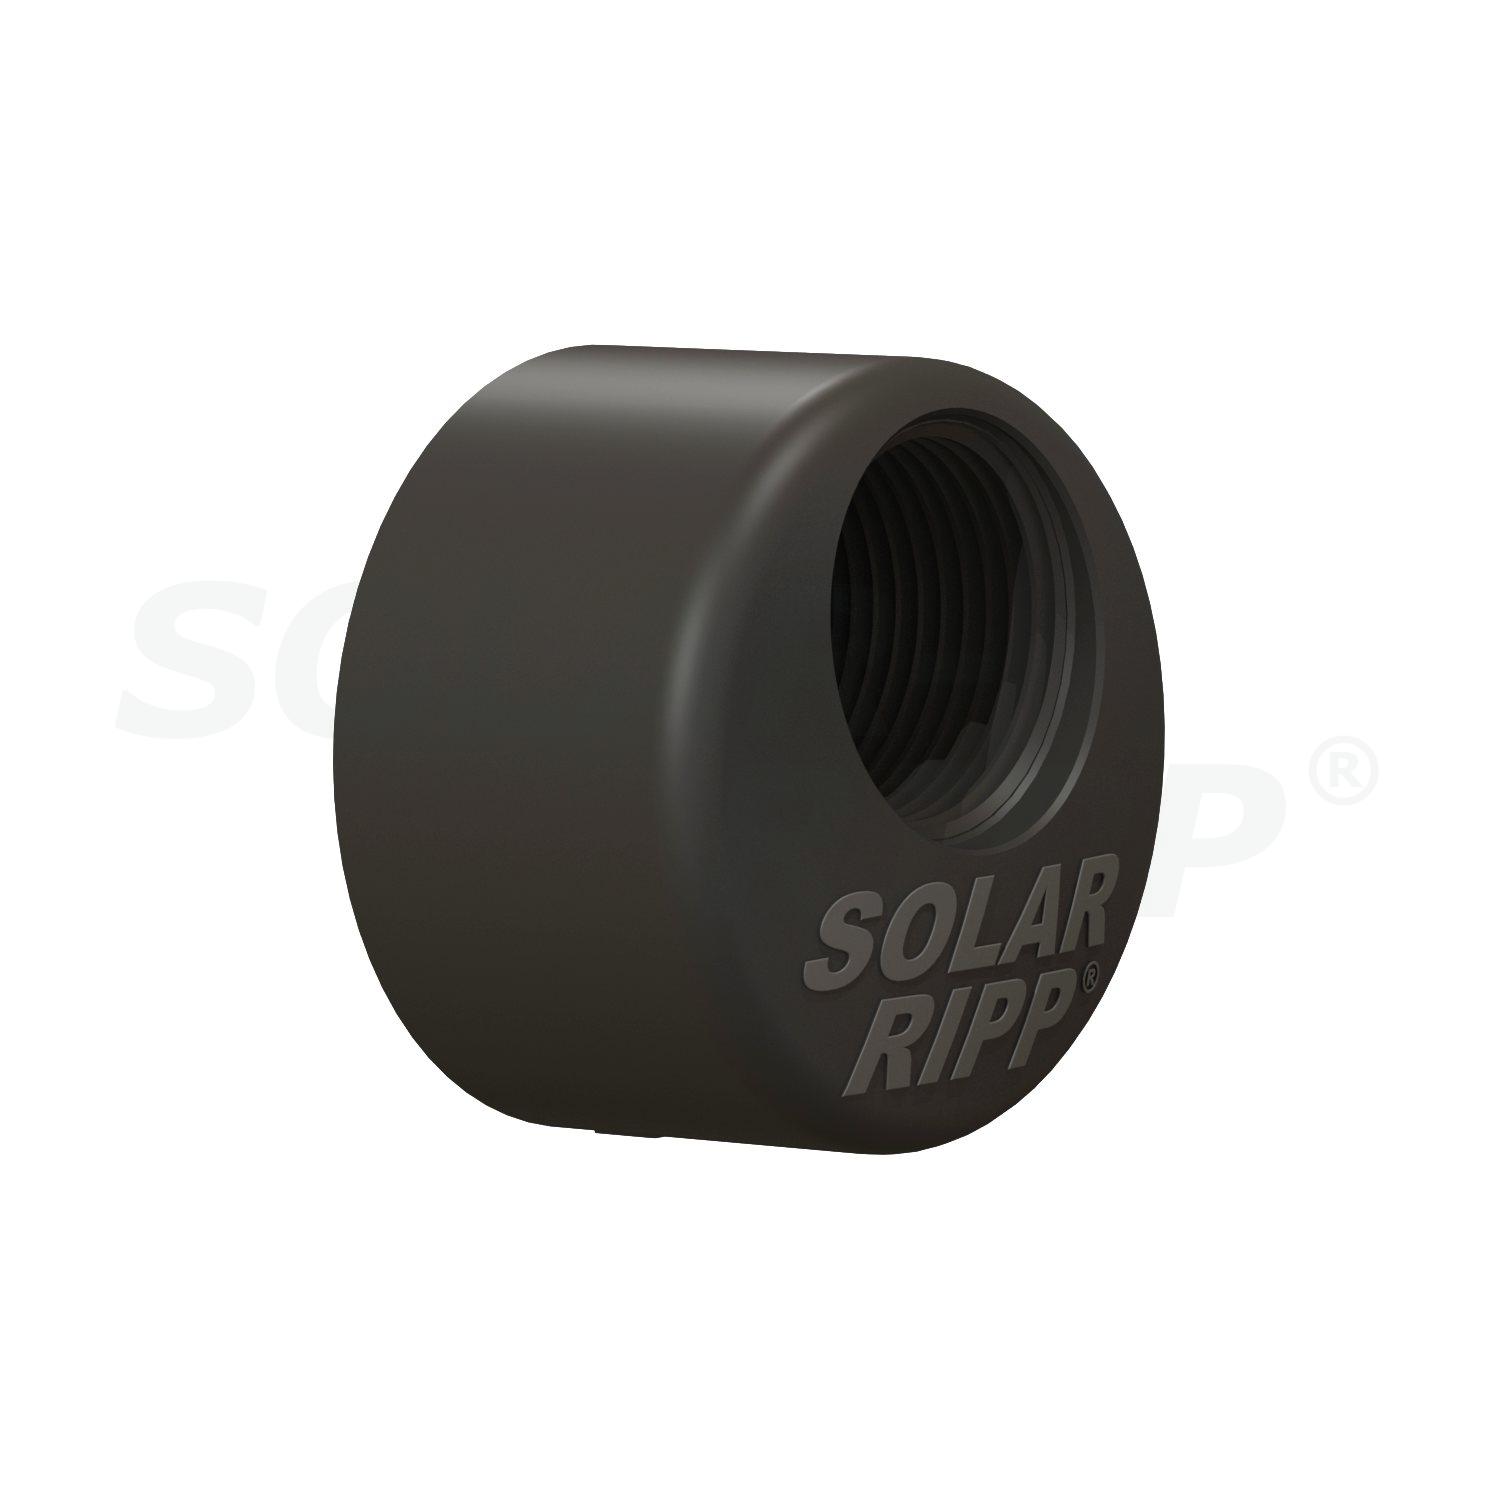 SOLAR-RIPP ® 50mm άκρο διανομέα με εσωτερικό σπείρωμα 3/4" για συγκόλληση